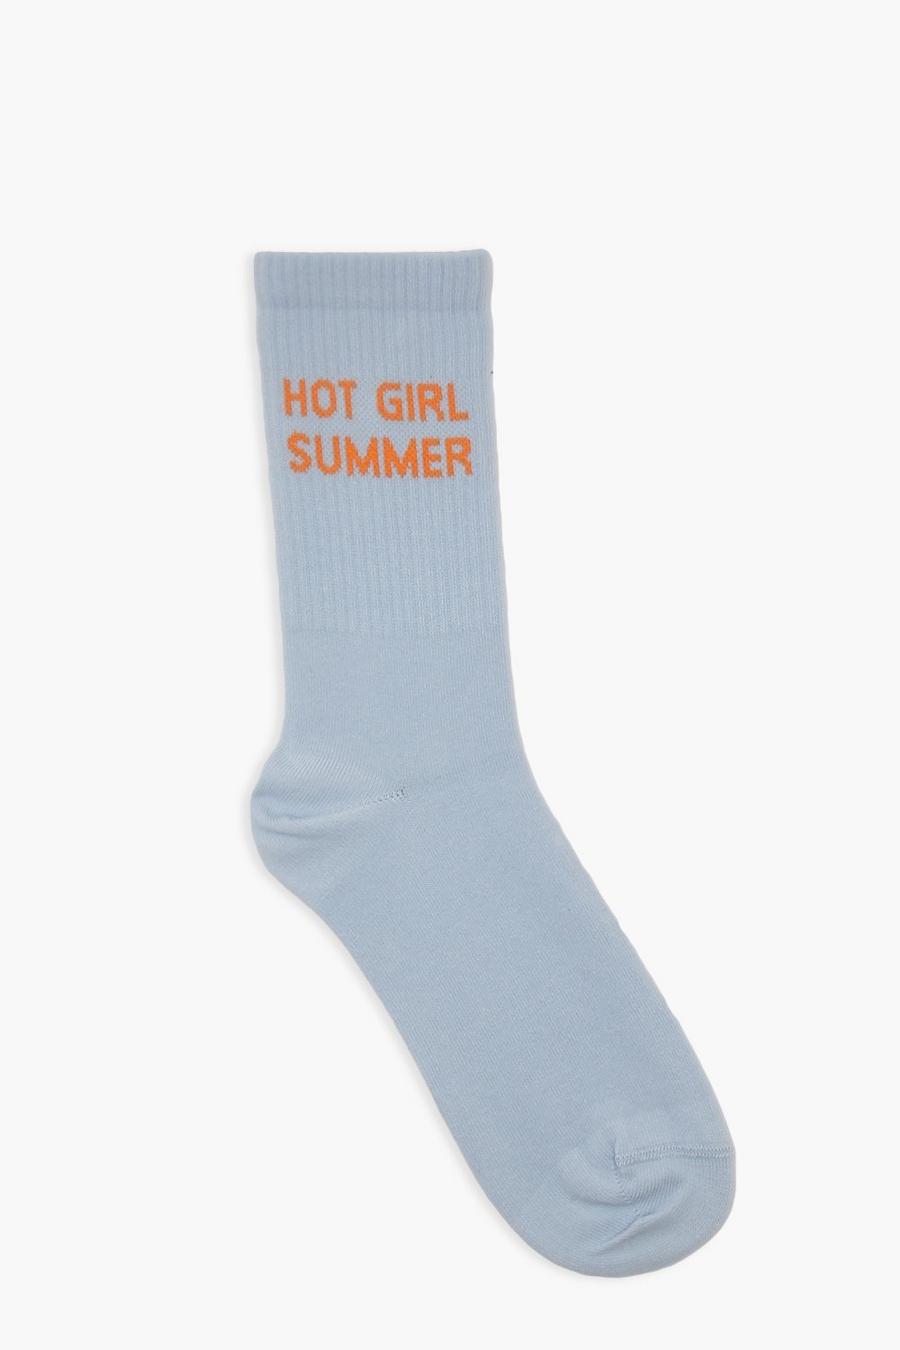 Socken mit Hot Girl Summer Slogan, Blue blau